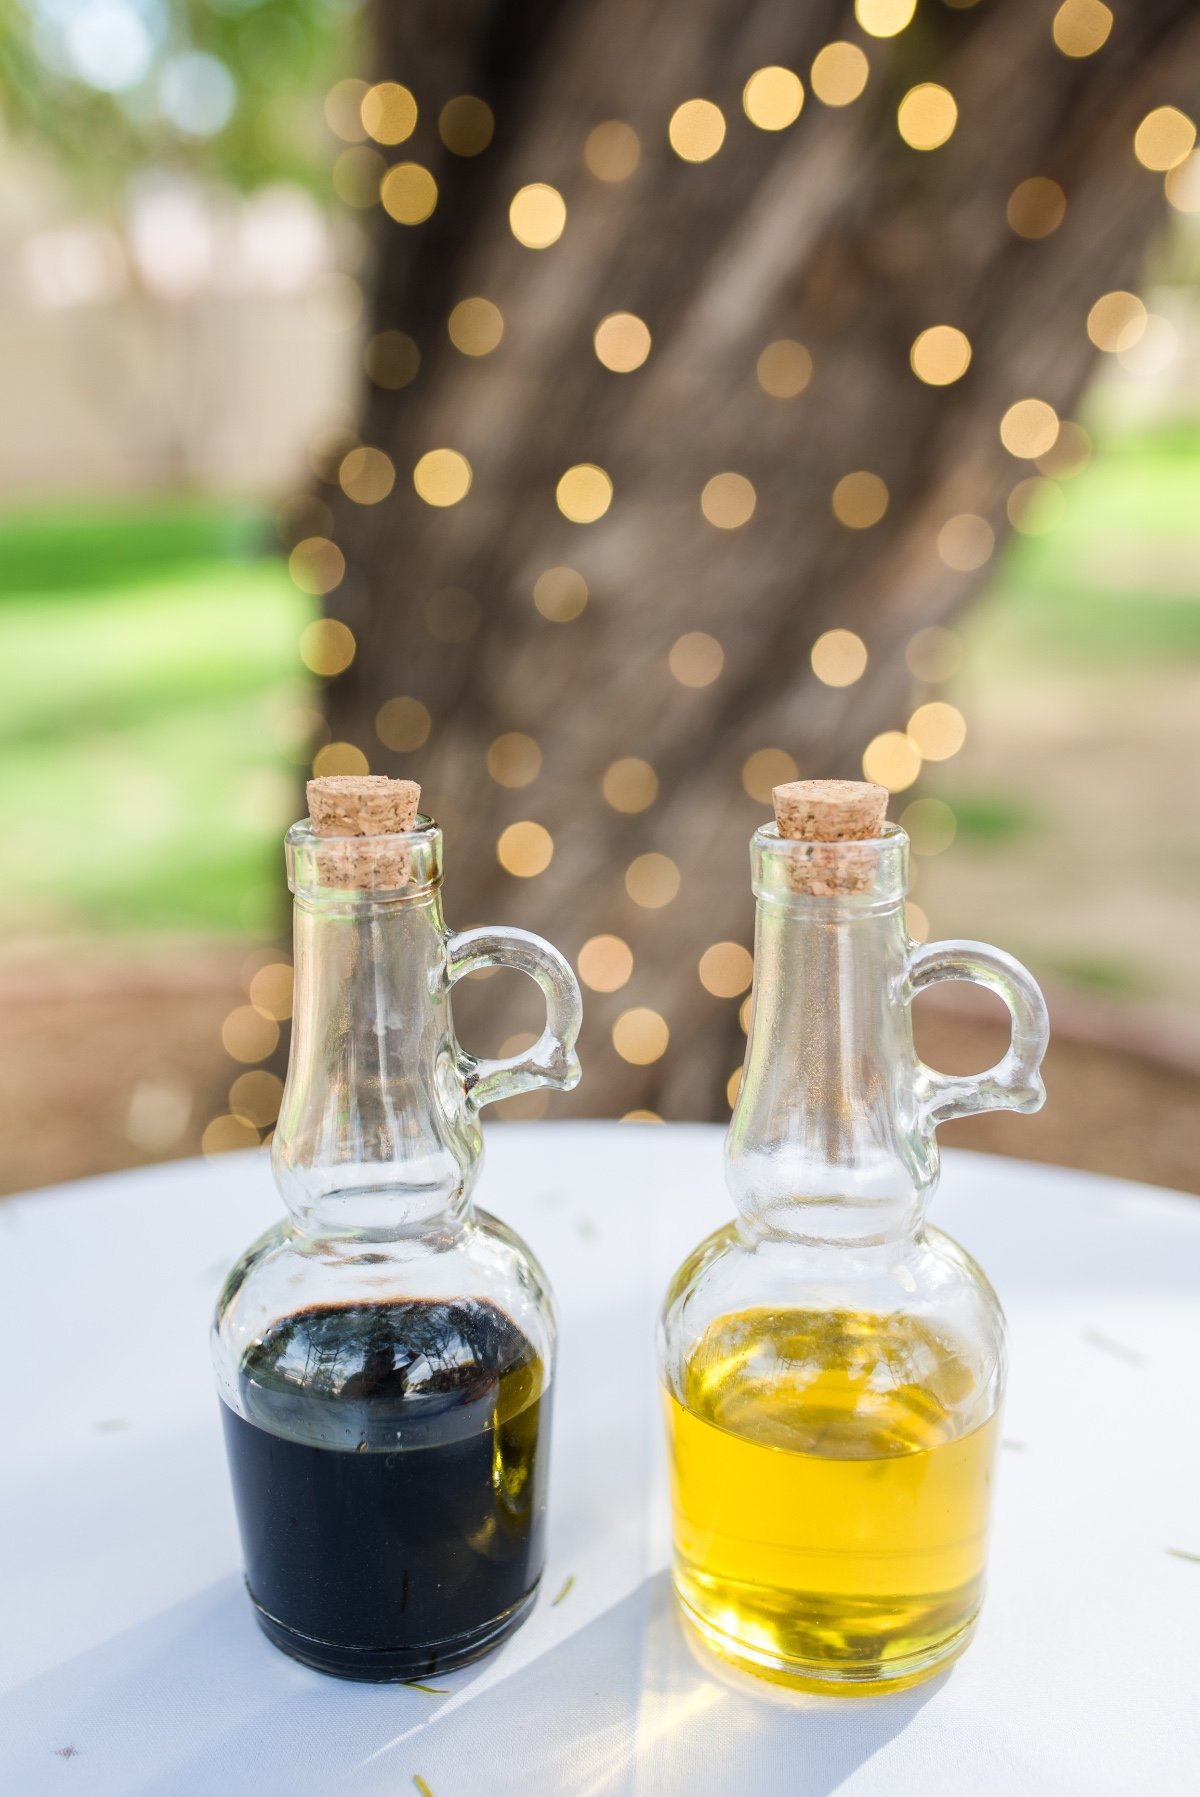 Vinegar and oil ceremony